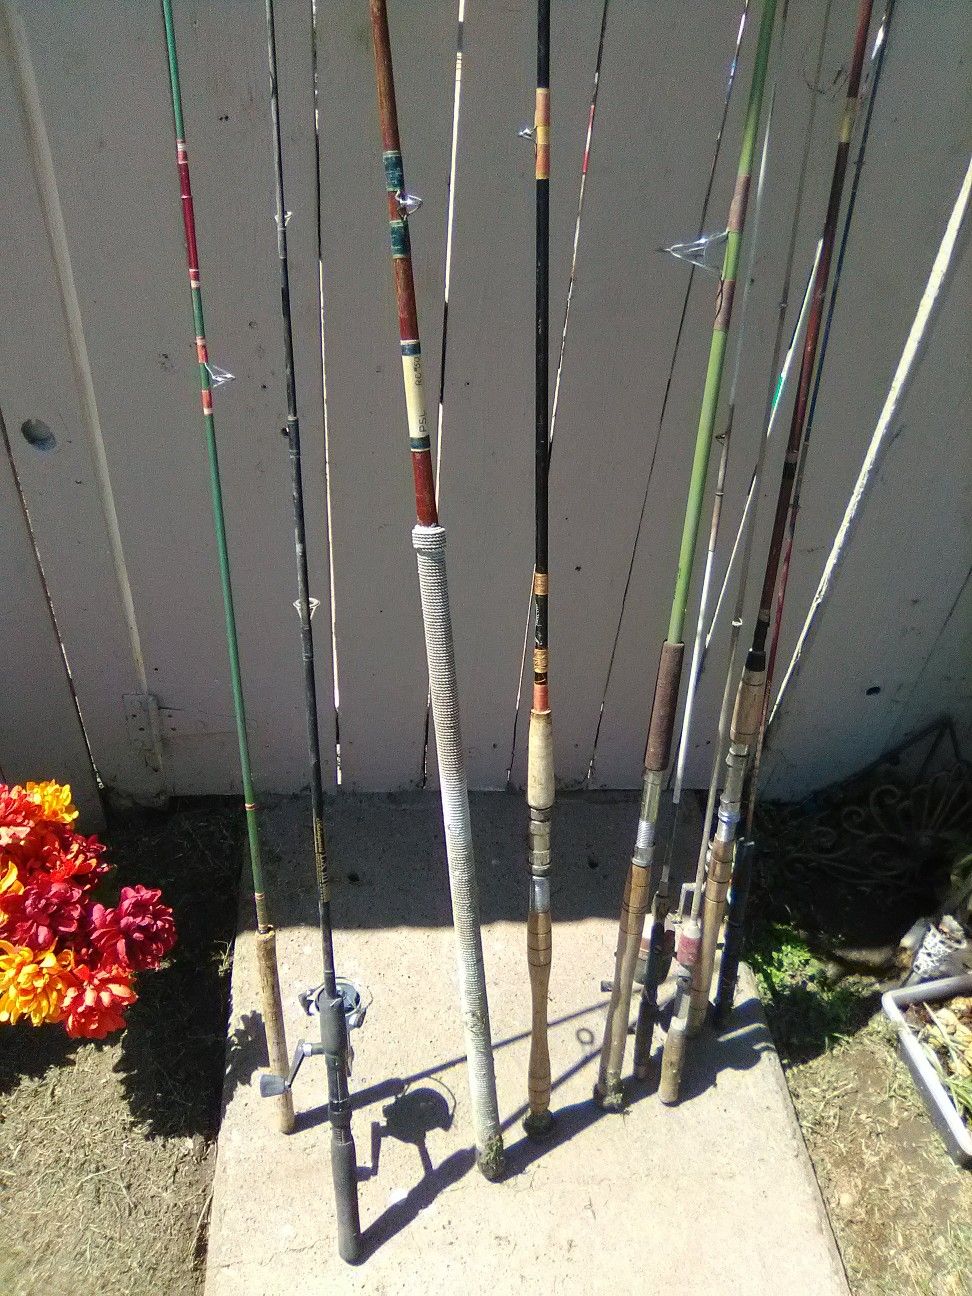 Vintage fishing poles so I'm not